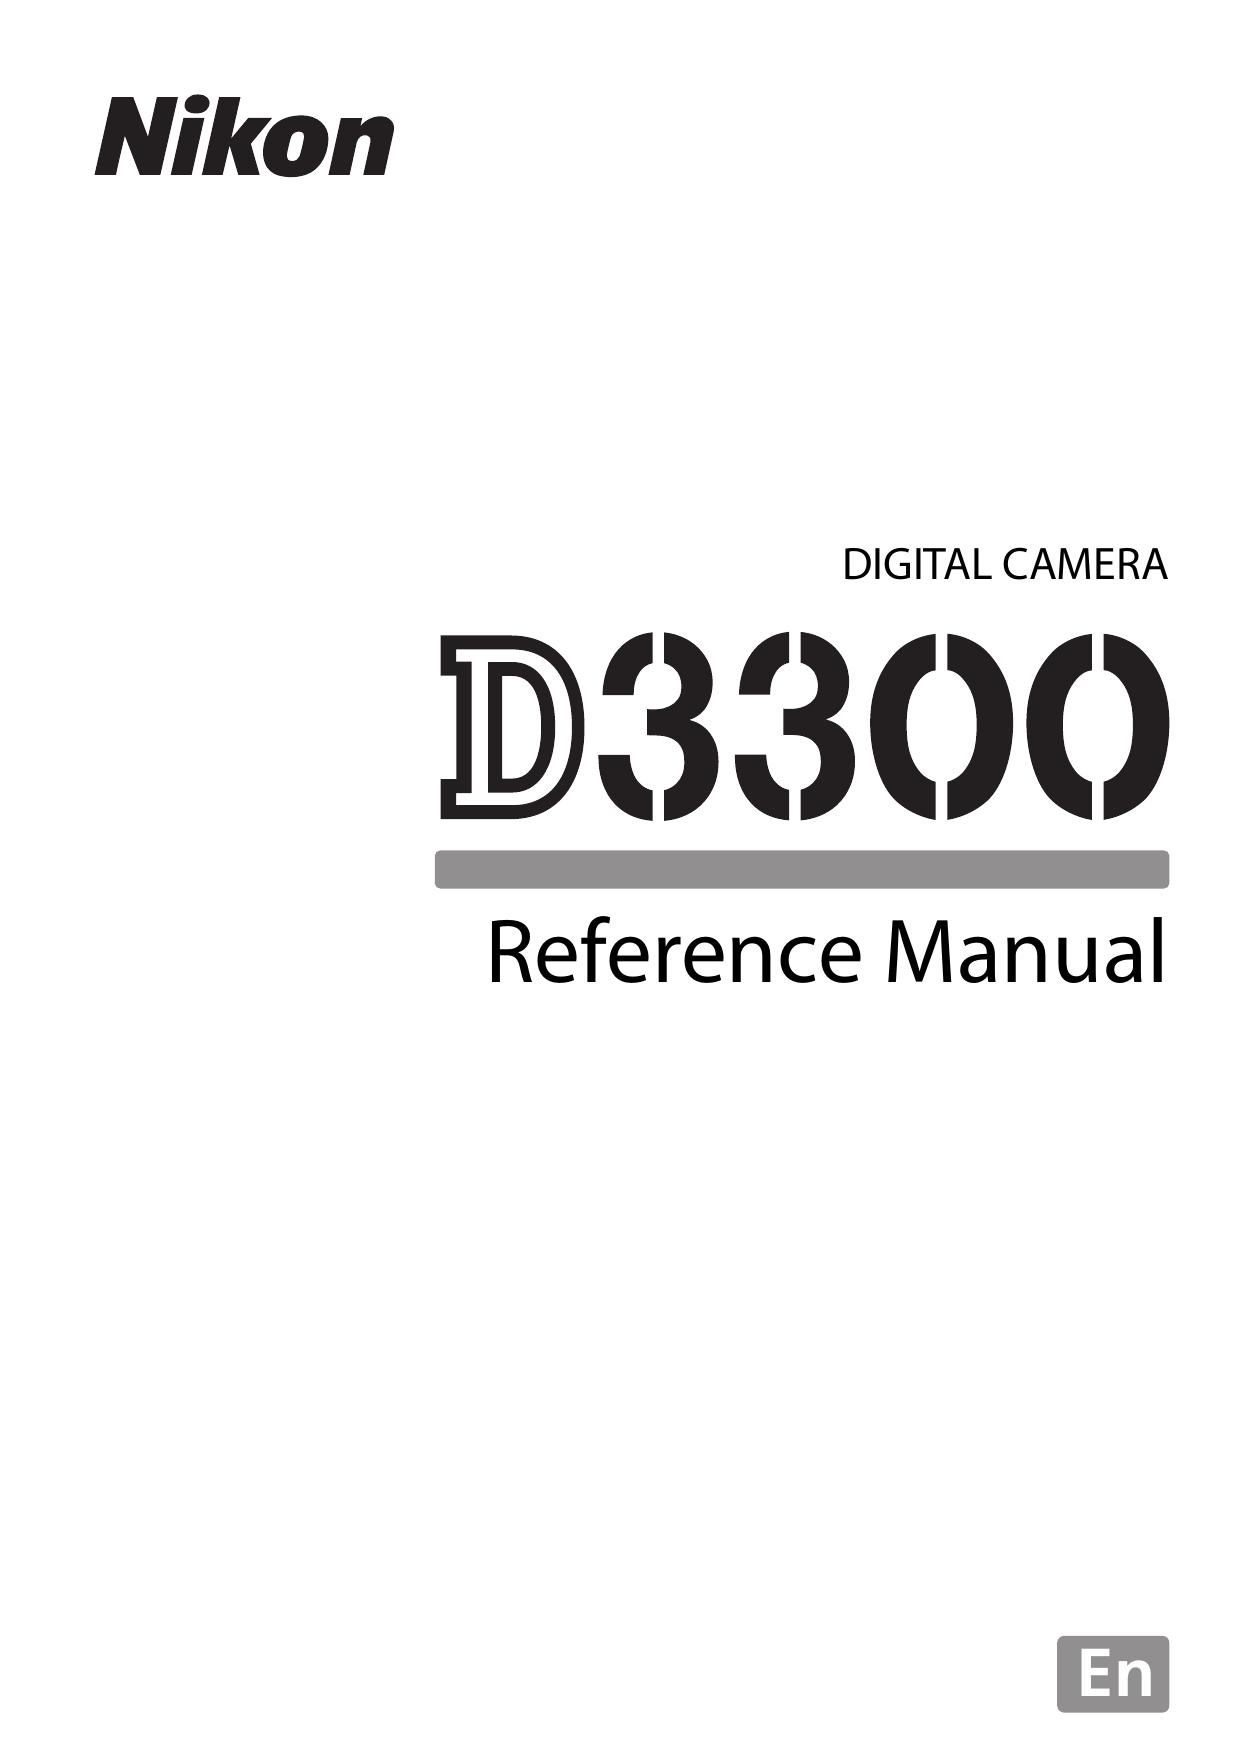 Nikon 1534 Digital Camera User Manual